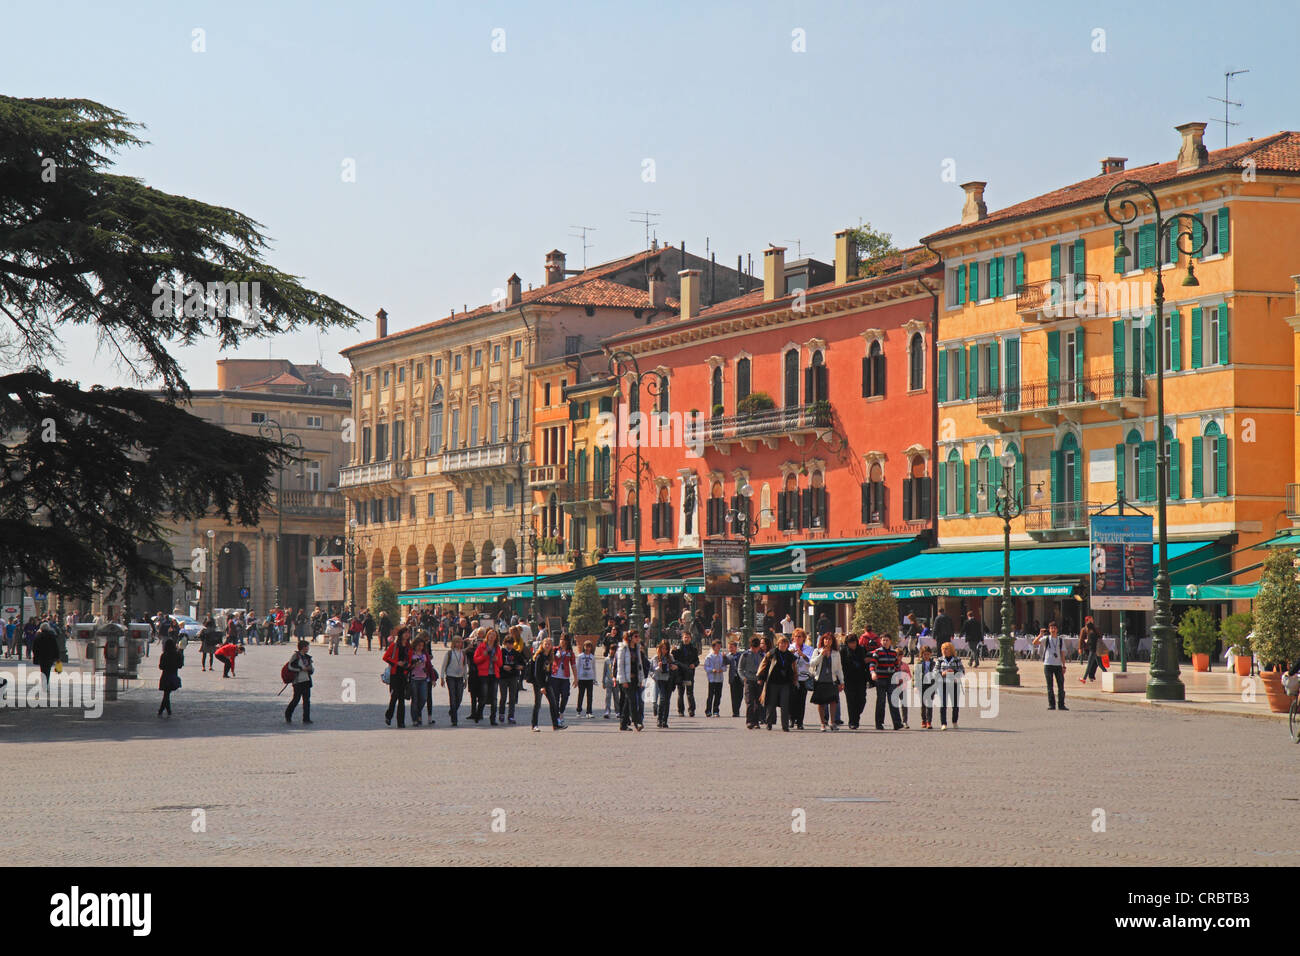 Piazza Bra square, Verona, Veneto region, Italy, Europe Stock Photo